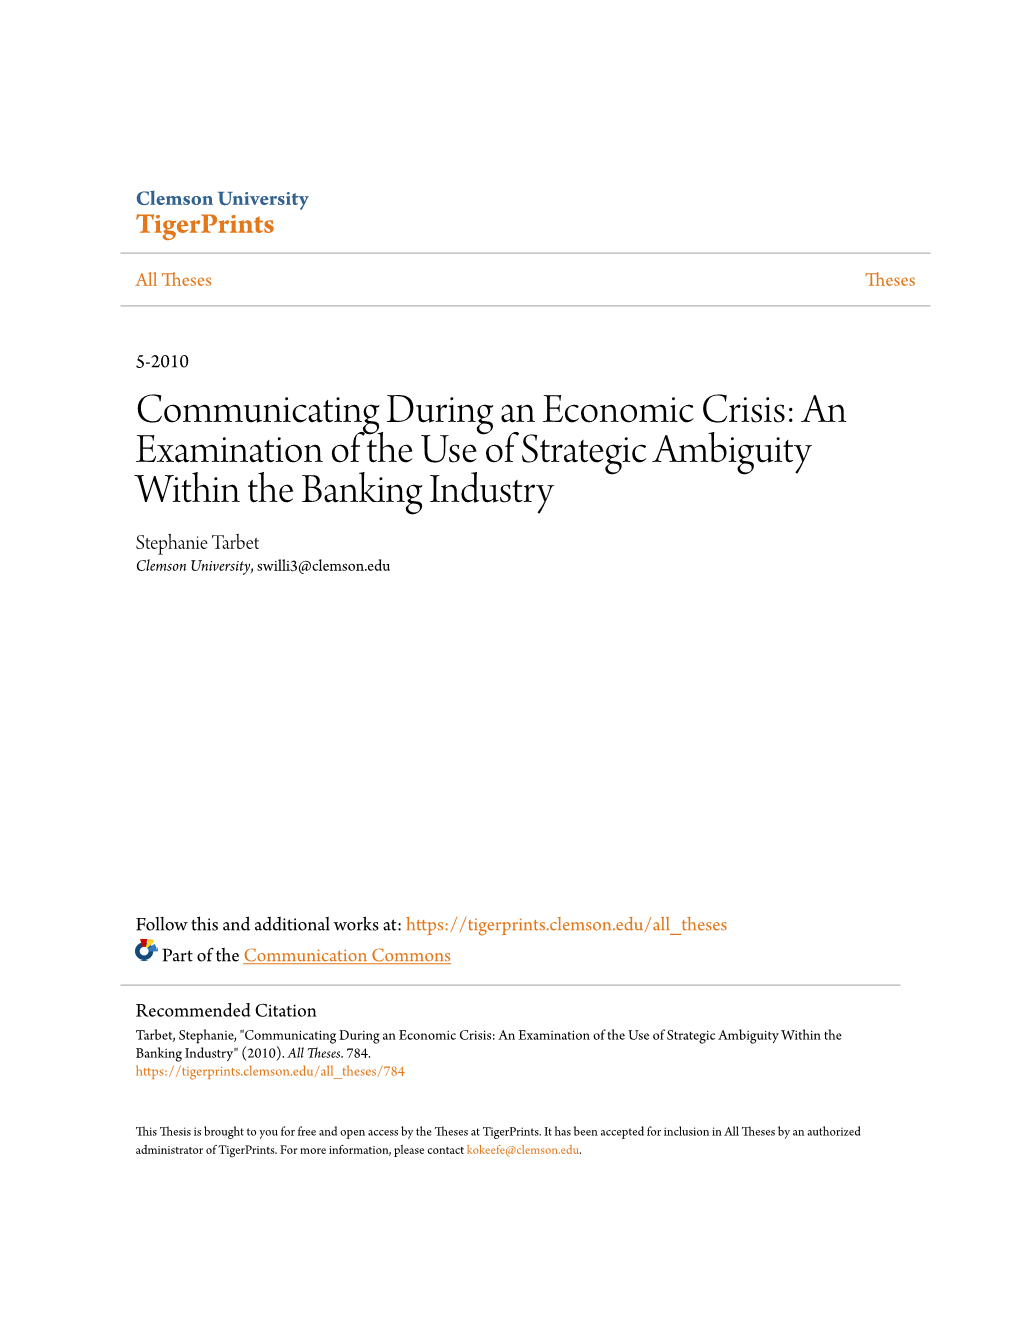 An Examination of the Use of Strategic Ambiguity Within the Banking Industry Stephanie Tarbet Clemson University, Swilli3@Clemson.Edu